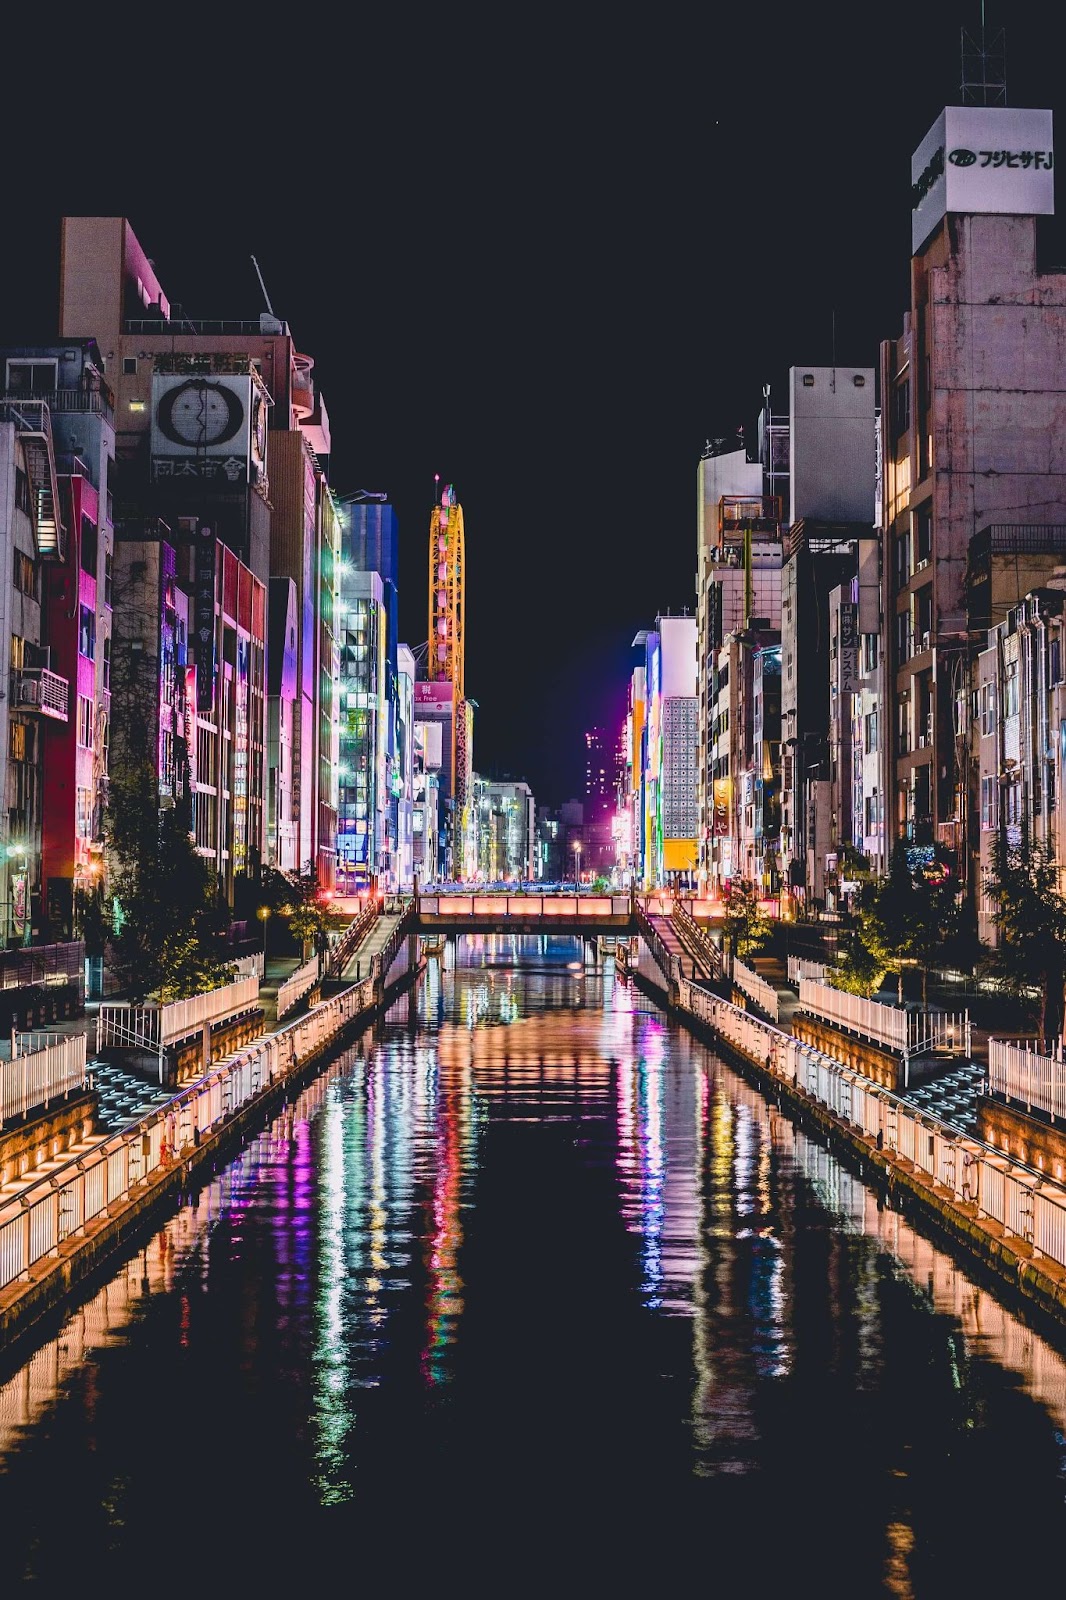 1 day in Osaka, Dotonbori, shopping and nightlife in Osaka, Dotonbori Canal, Osaka, Japan